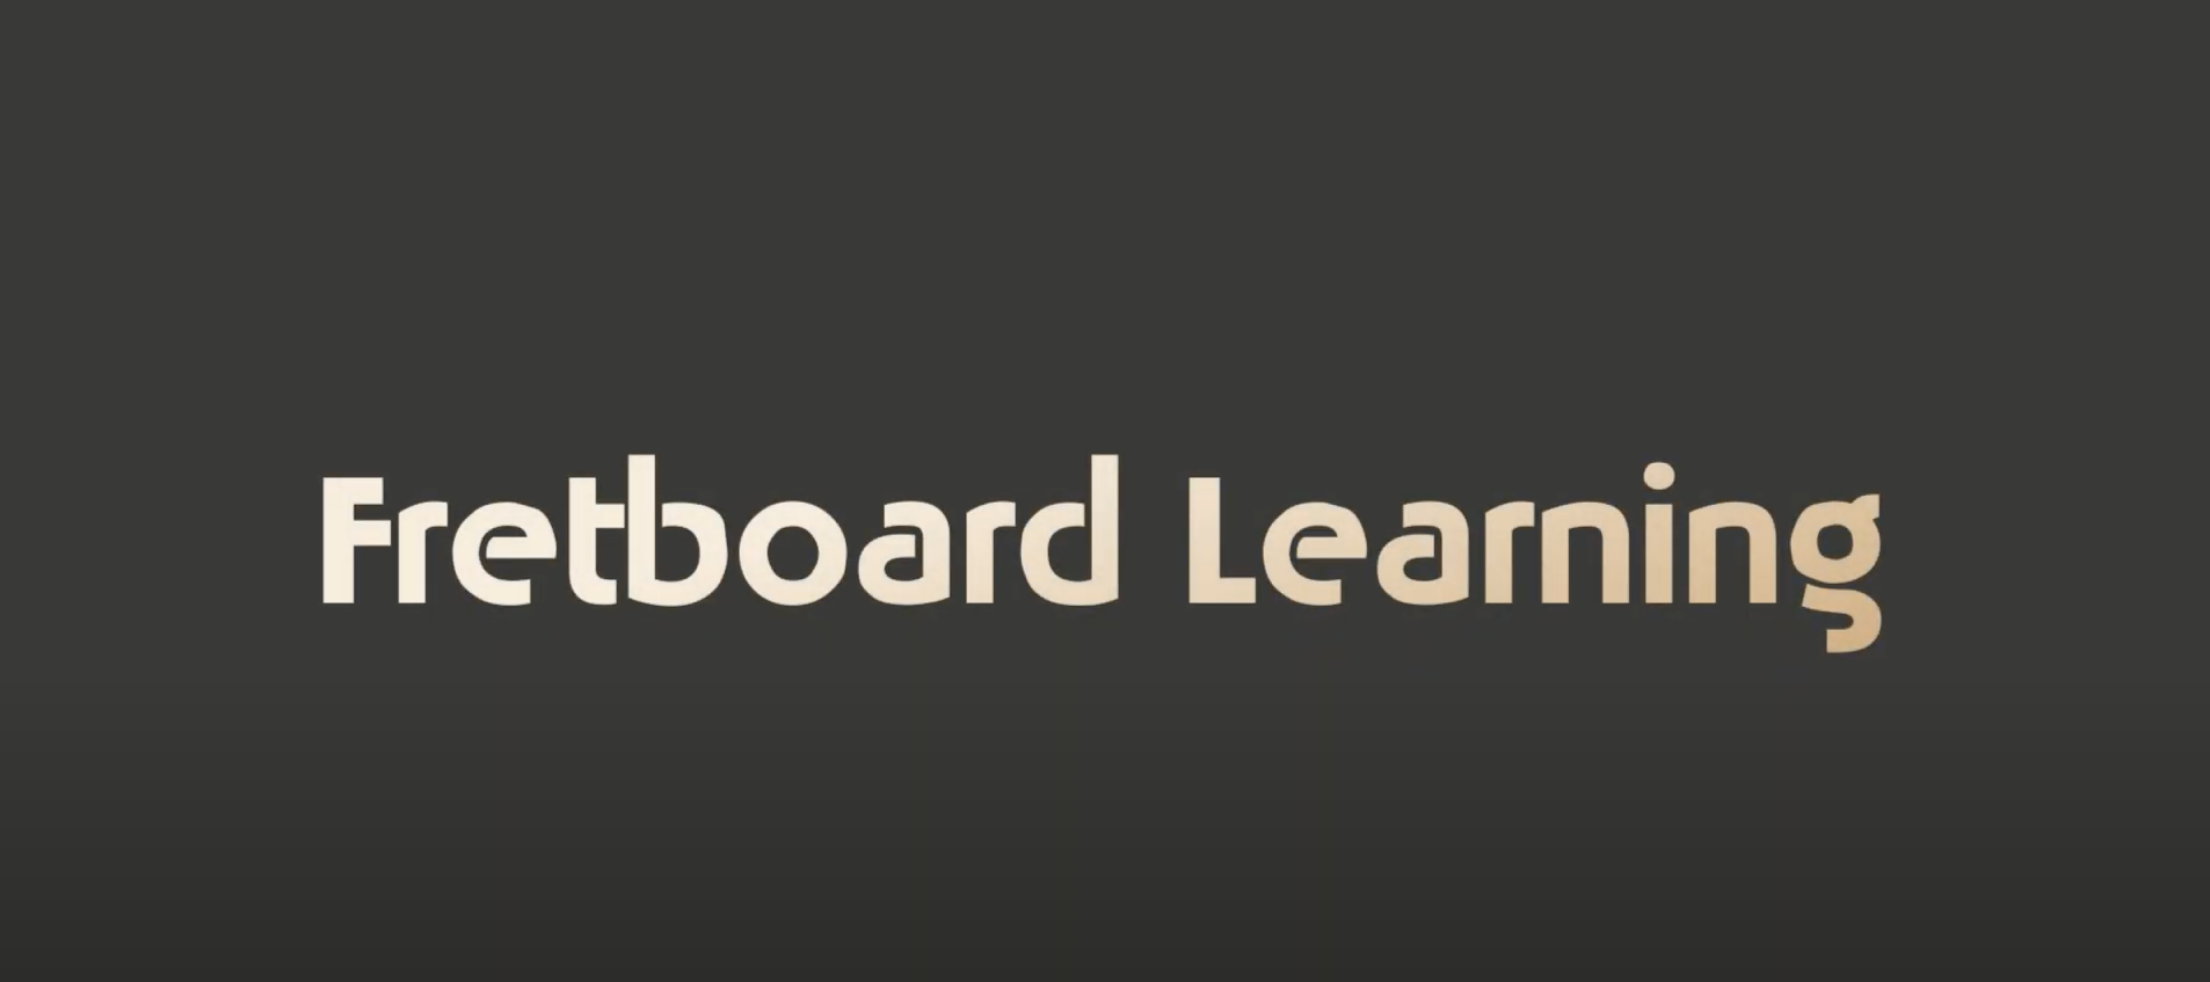 Blog cover representing Fretboard Learning app logo